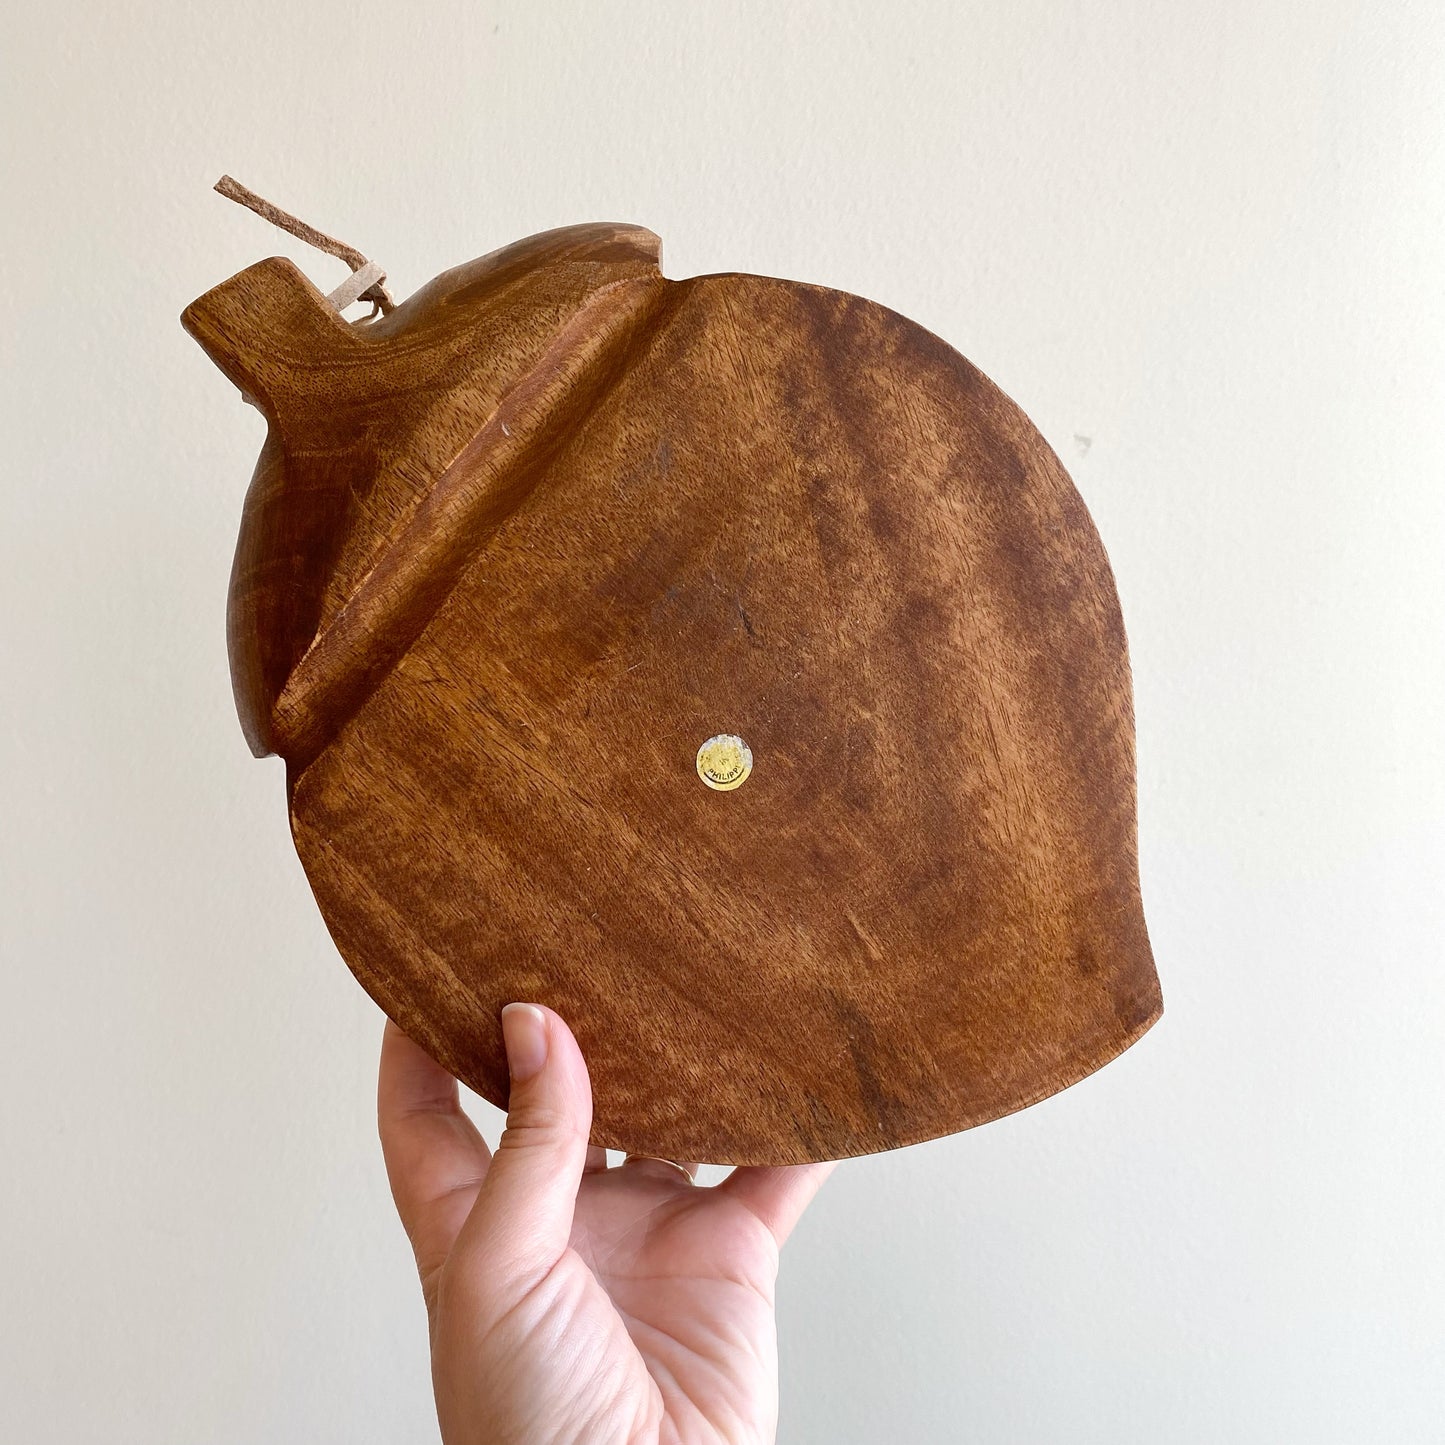 Vintage Shallow Wood “Fruit” Bowl